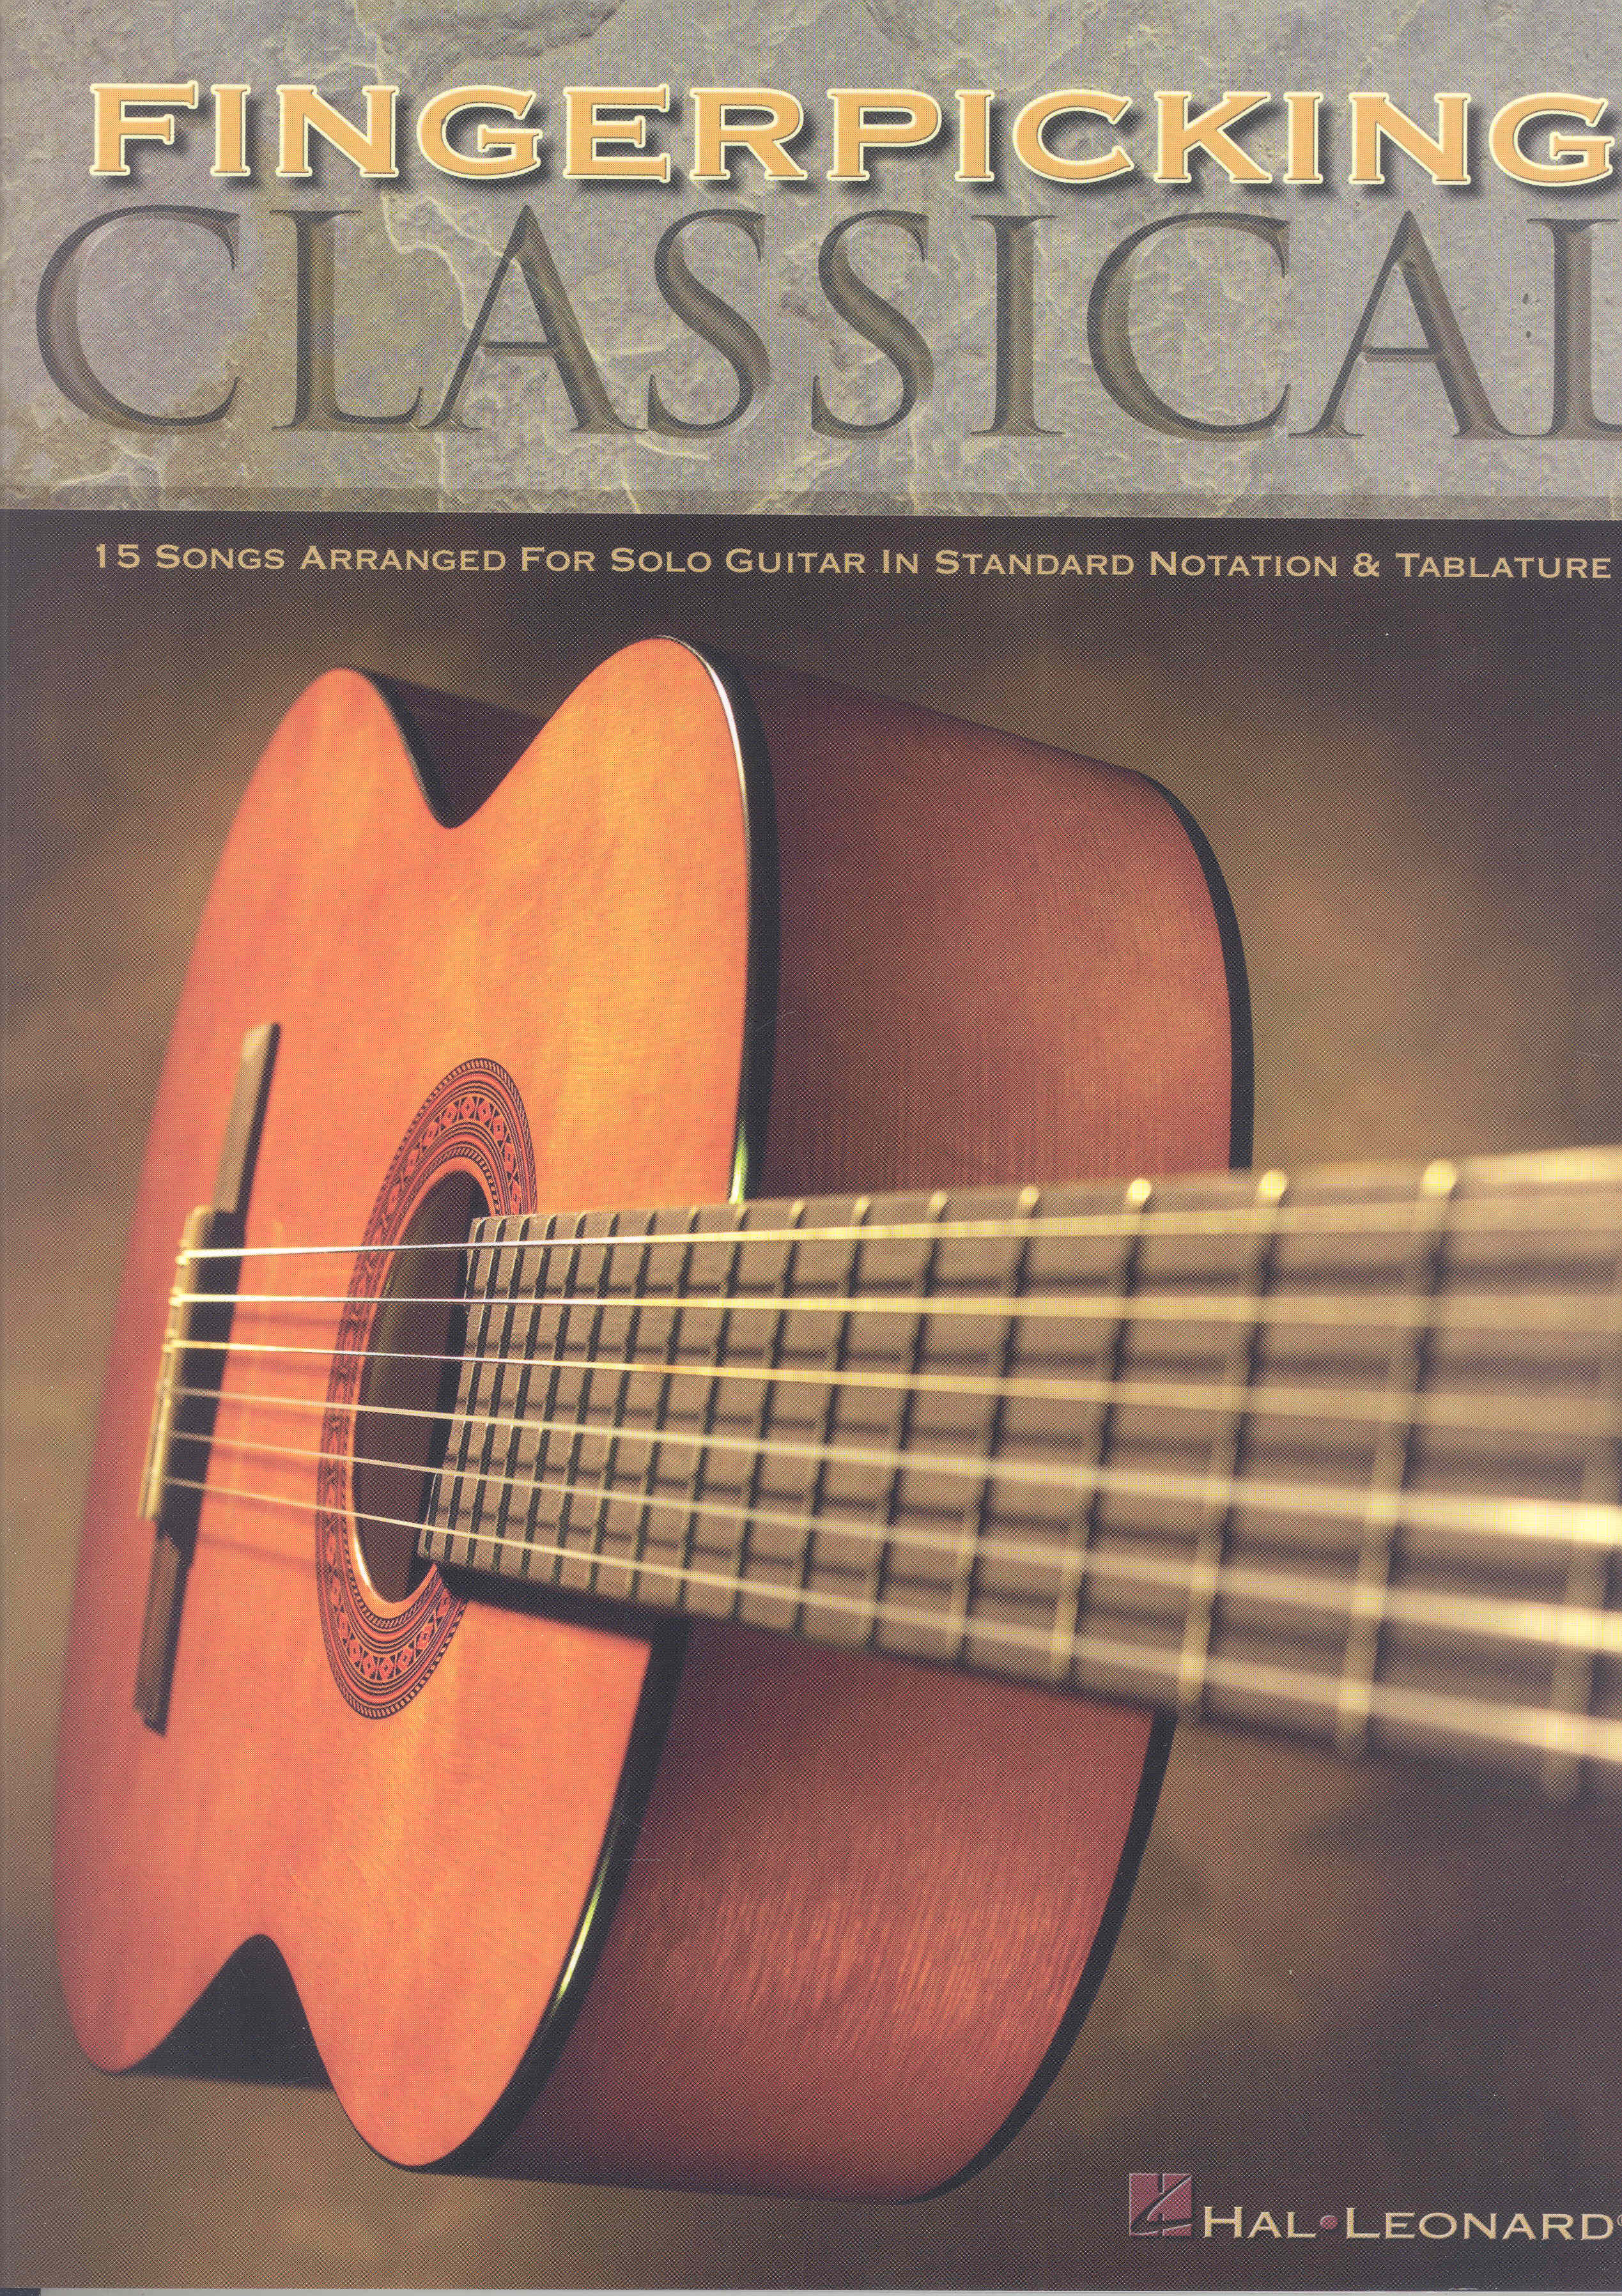 Fingerpicking Classical Guitar Tab Sheet Music Songbook